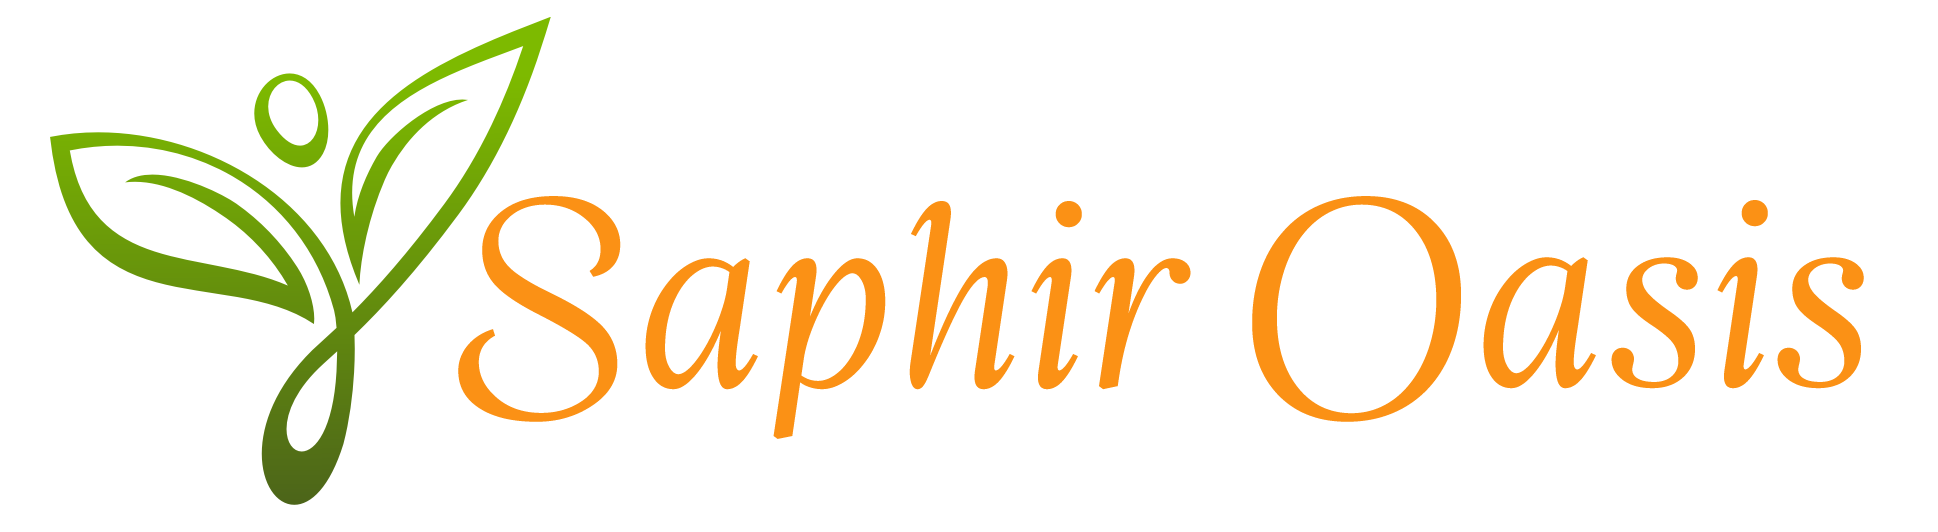 Saphir Oasis